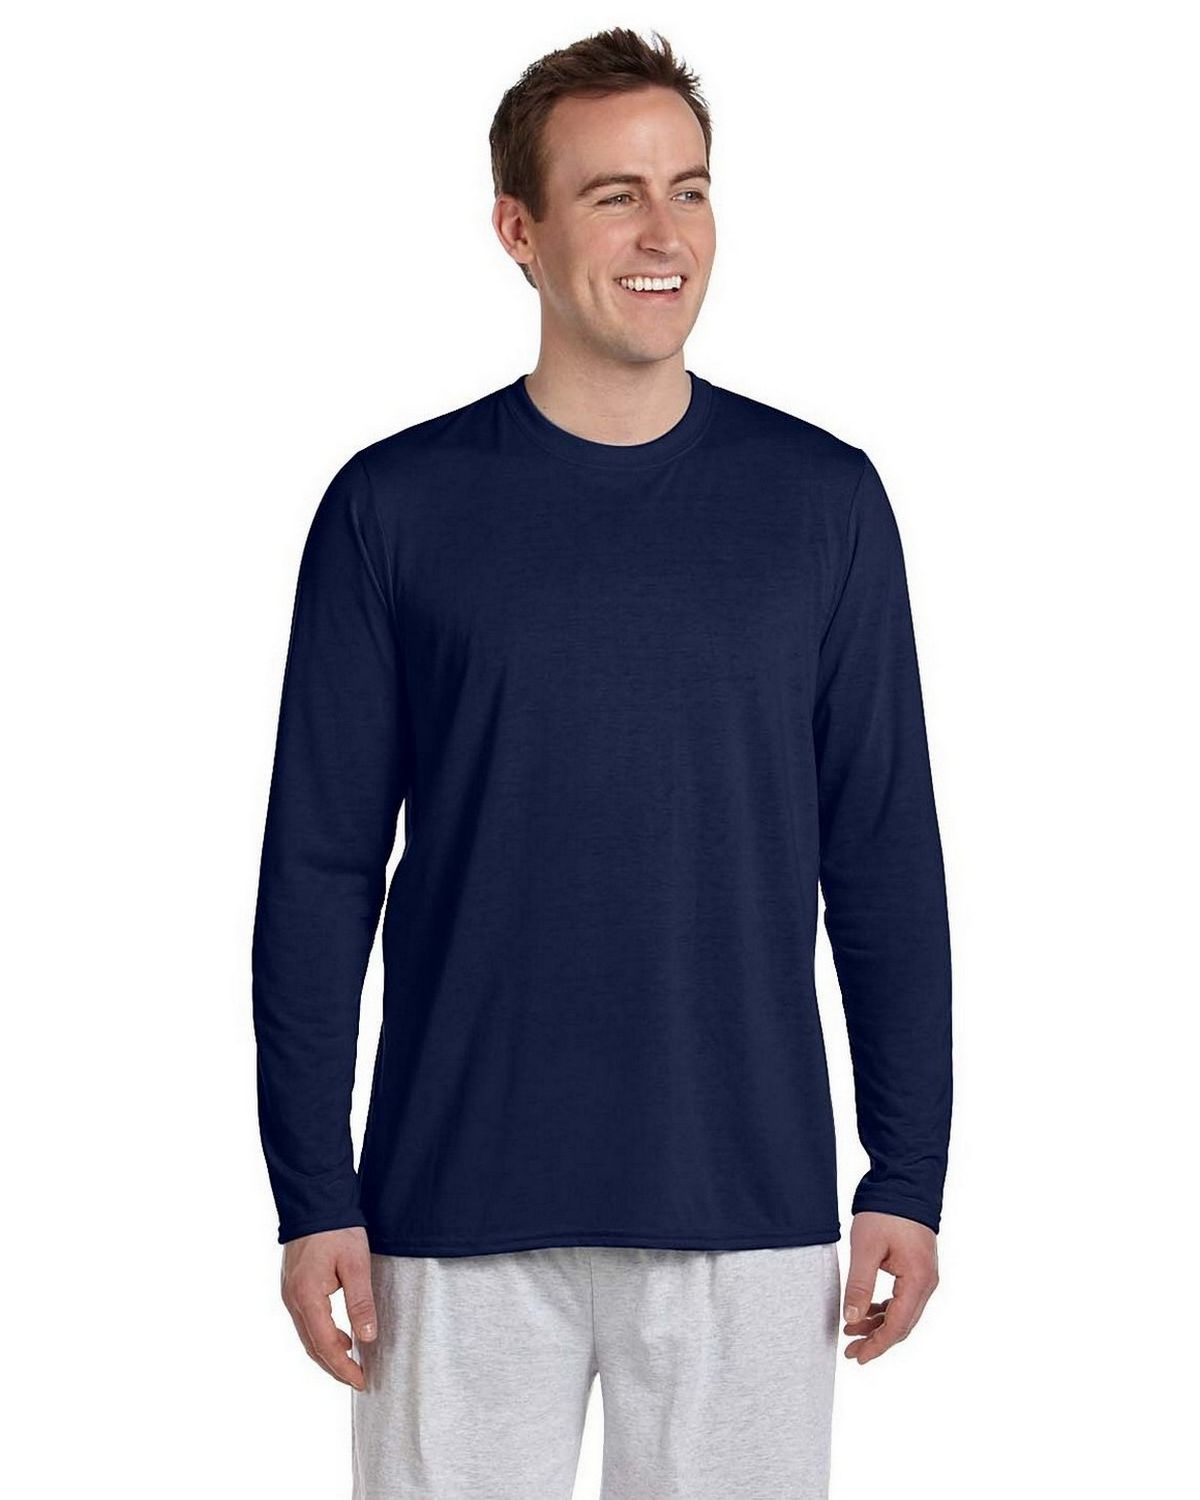 Gildan G424 Performance Long Sleeve T Shirt - ApparelnBags.com